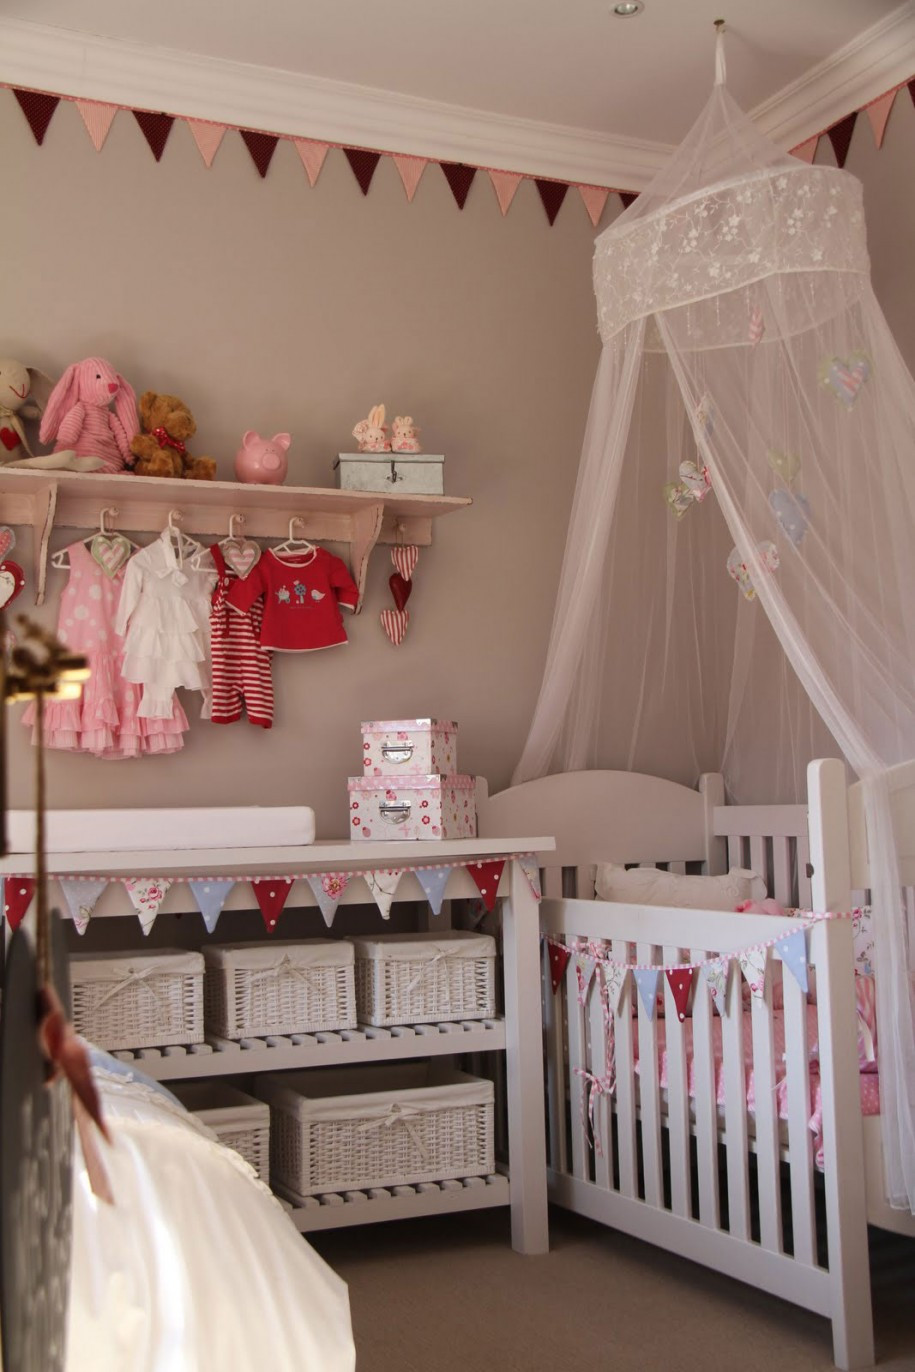 DIY Baby Room Decor Ideas
 Antique Baby Room Ideas Designed for Modern House